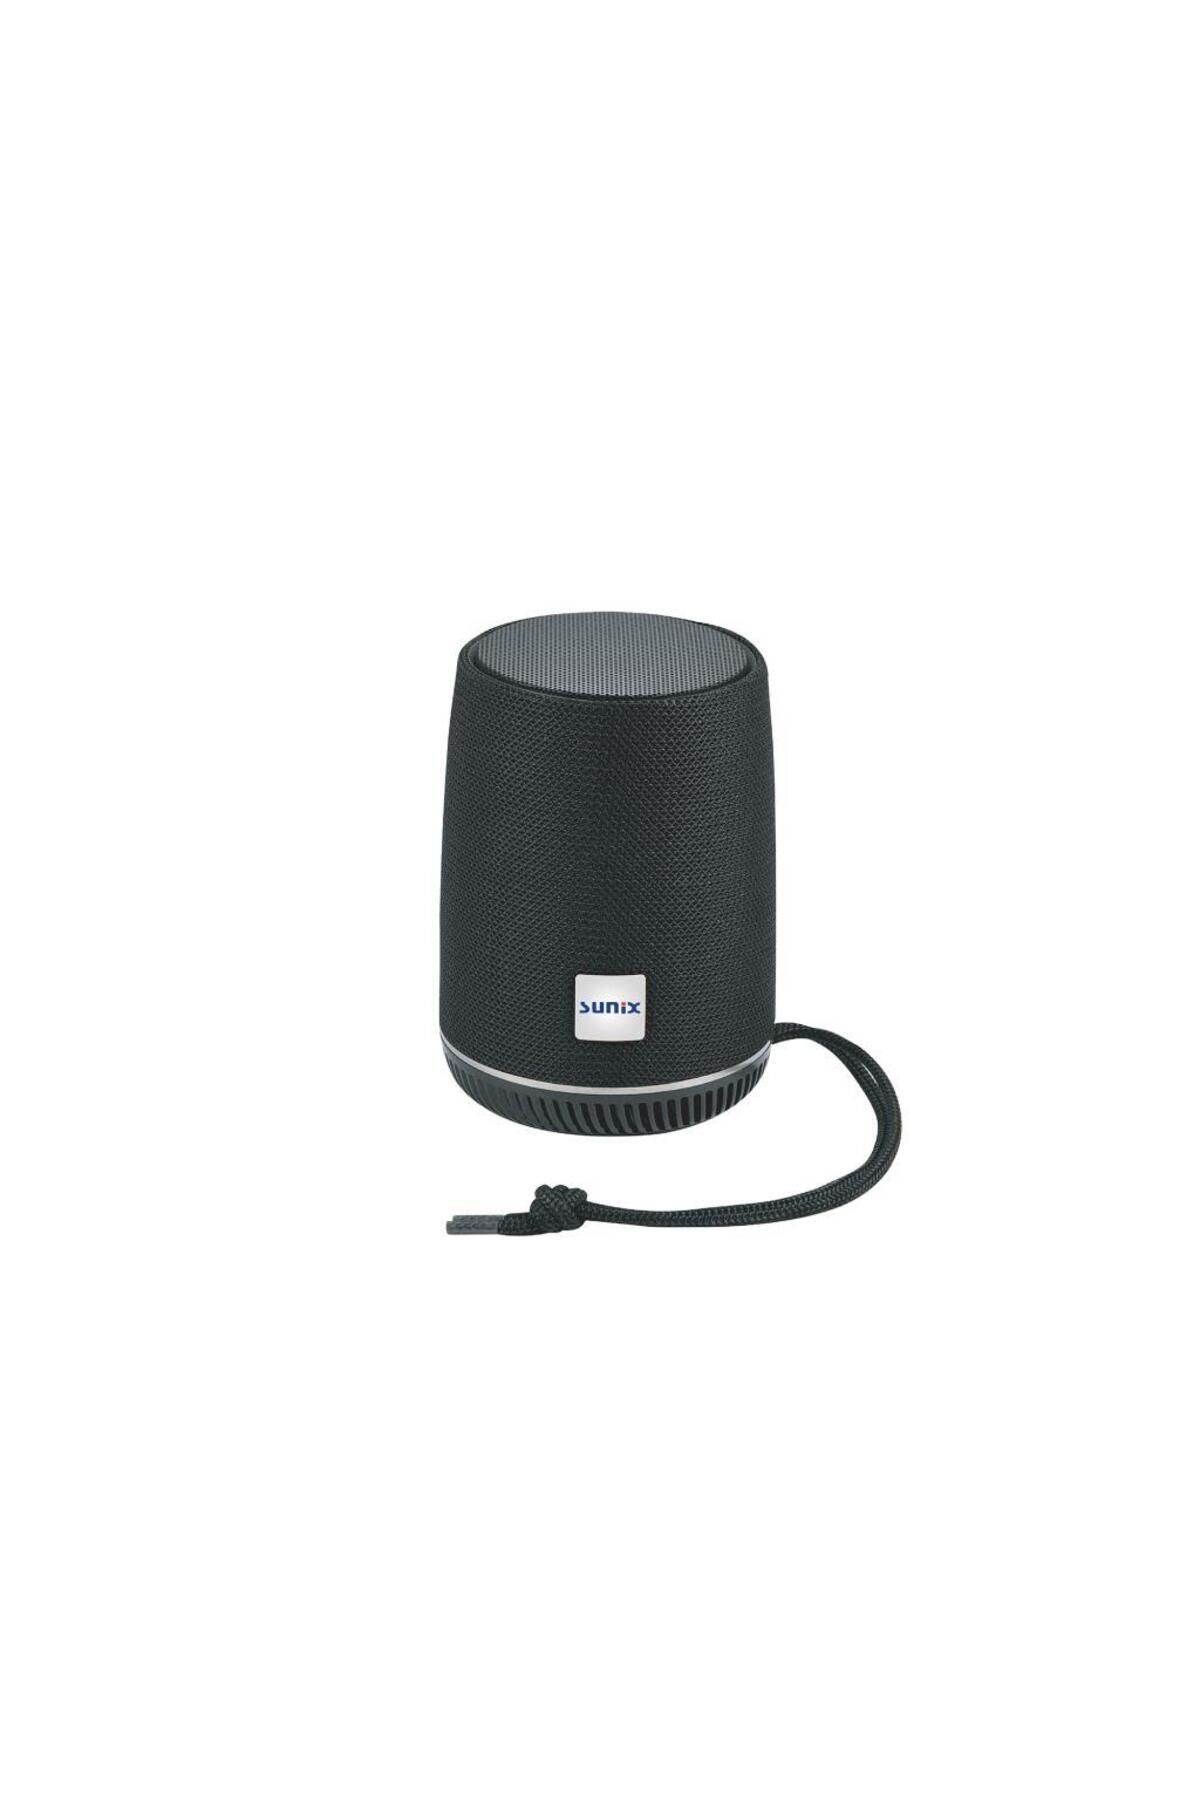 Sunix Taşınabilir Bluetooth Hoparlör Bts-34 Siyah